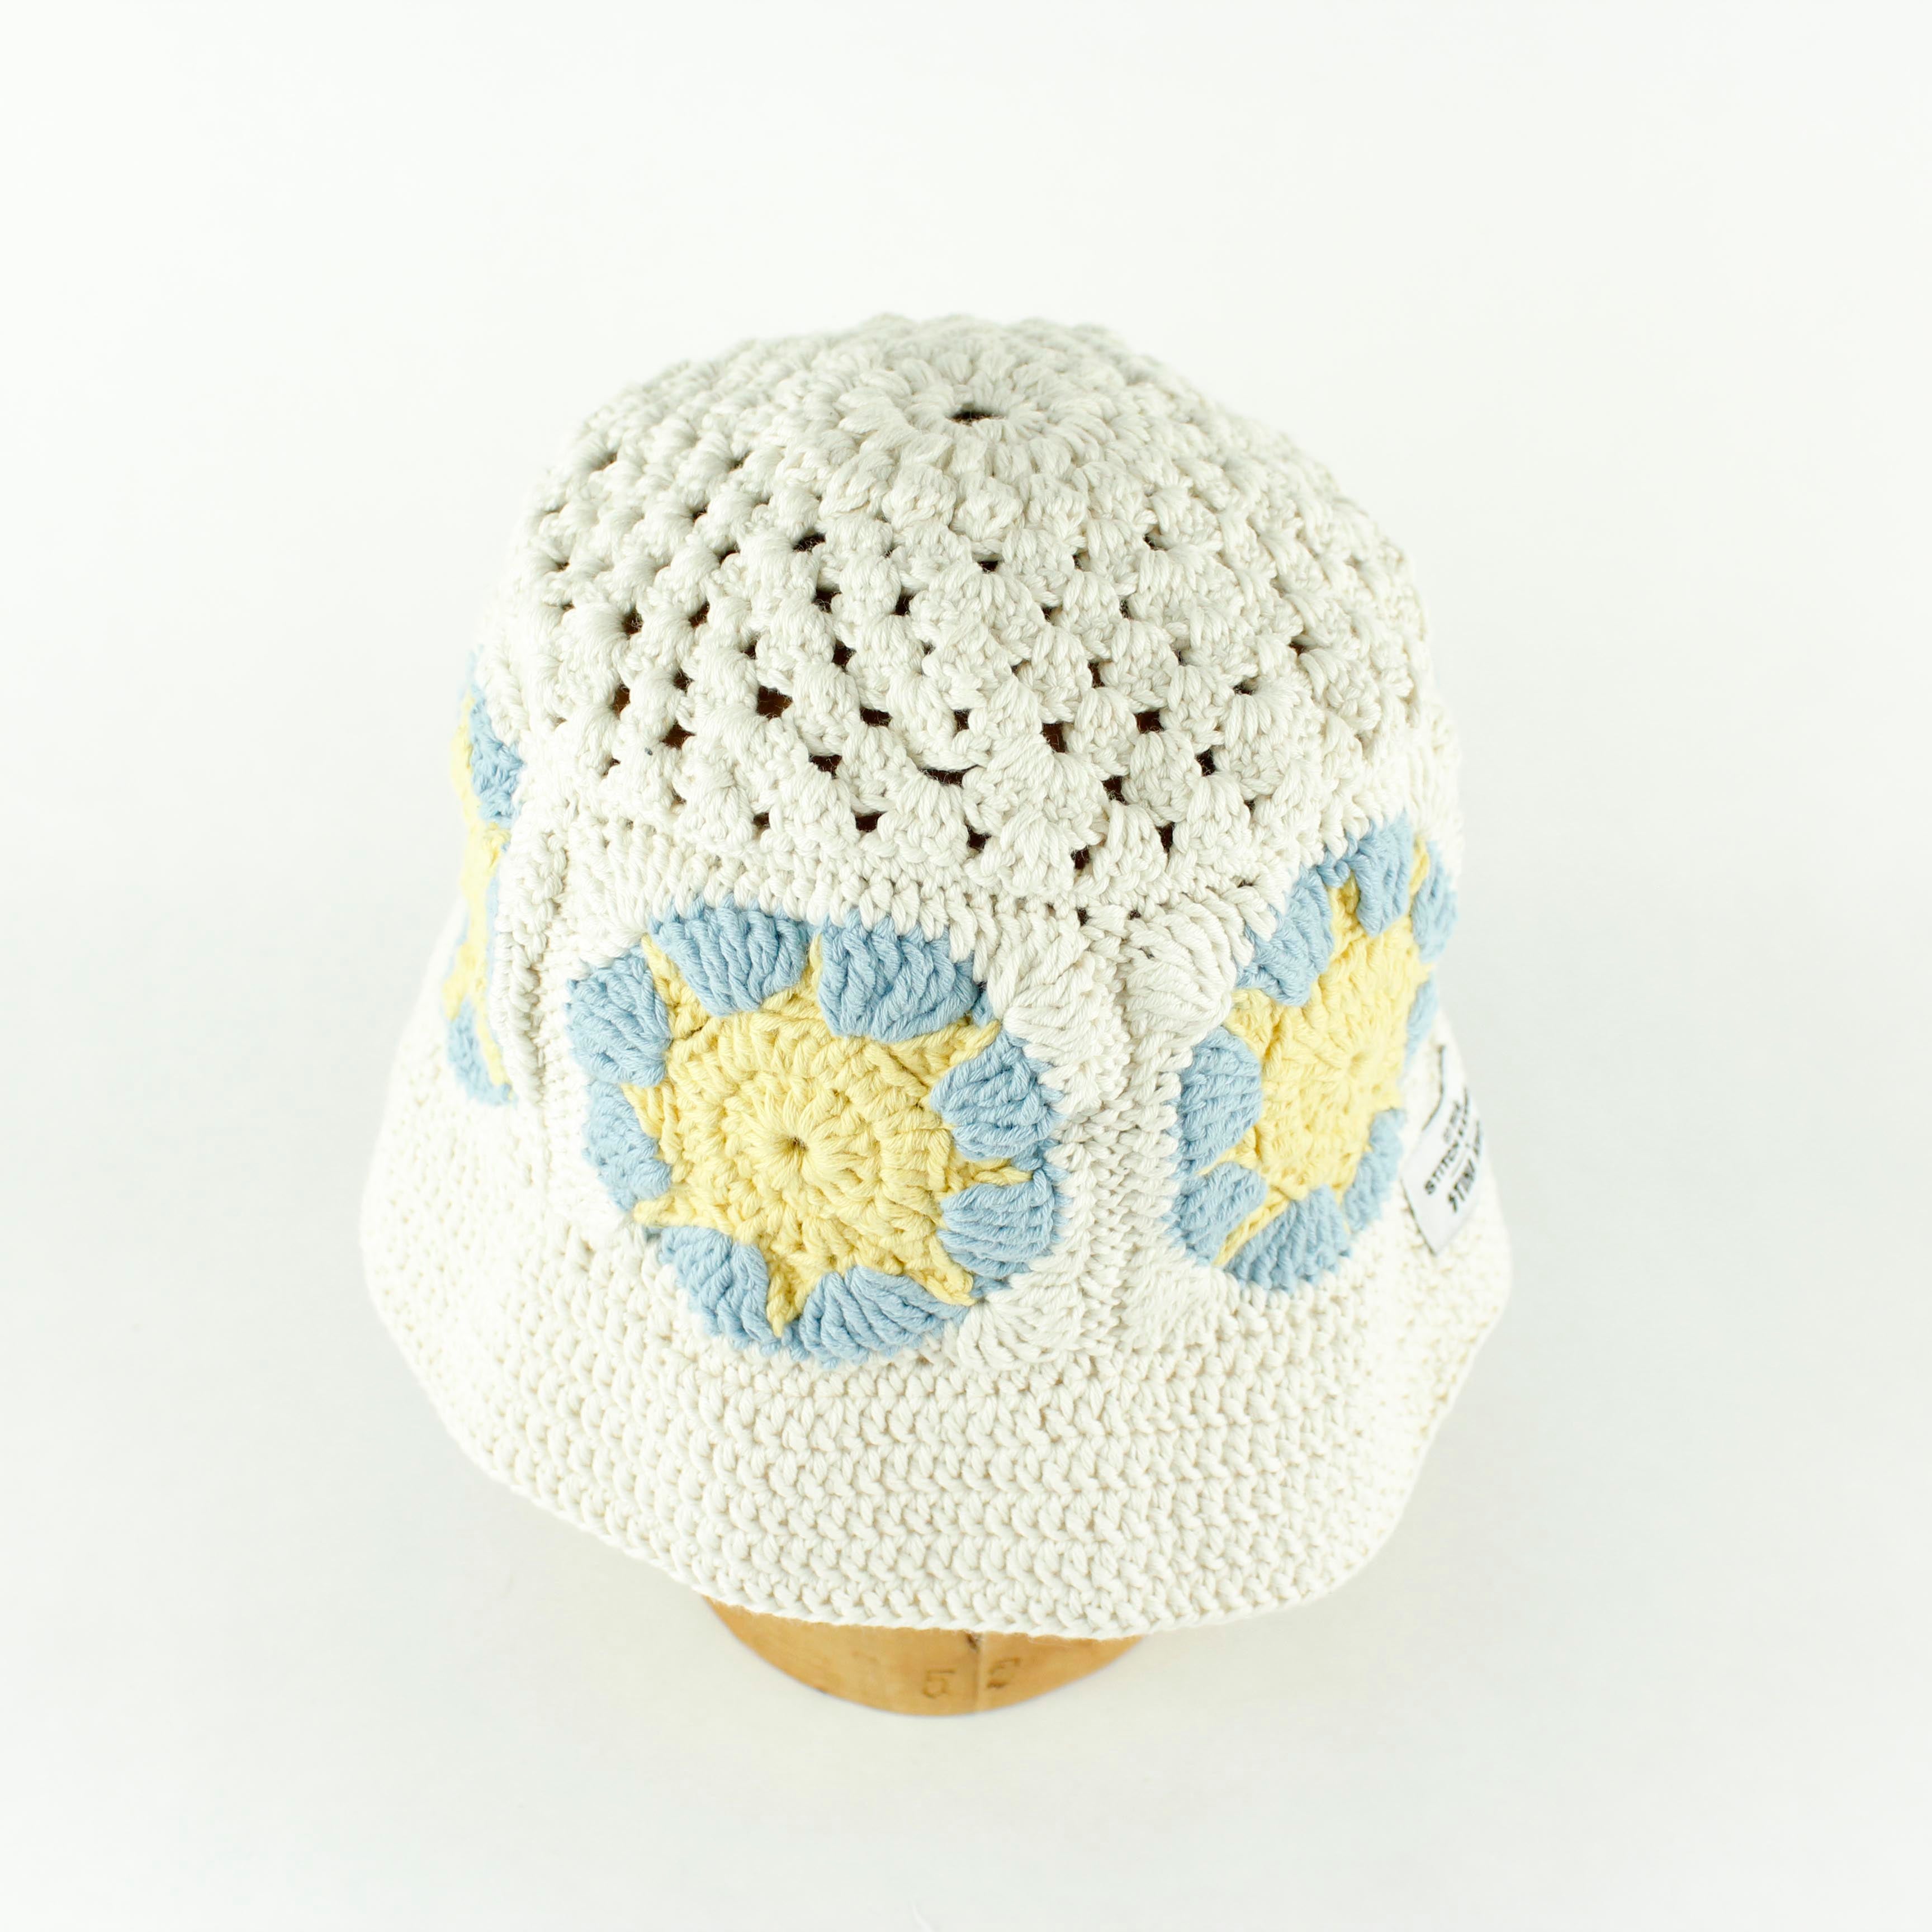 Blue sun crochet bucket hat by Stina Knits